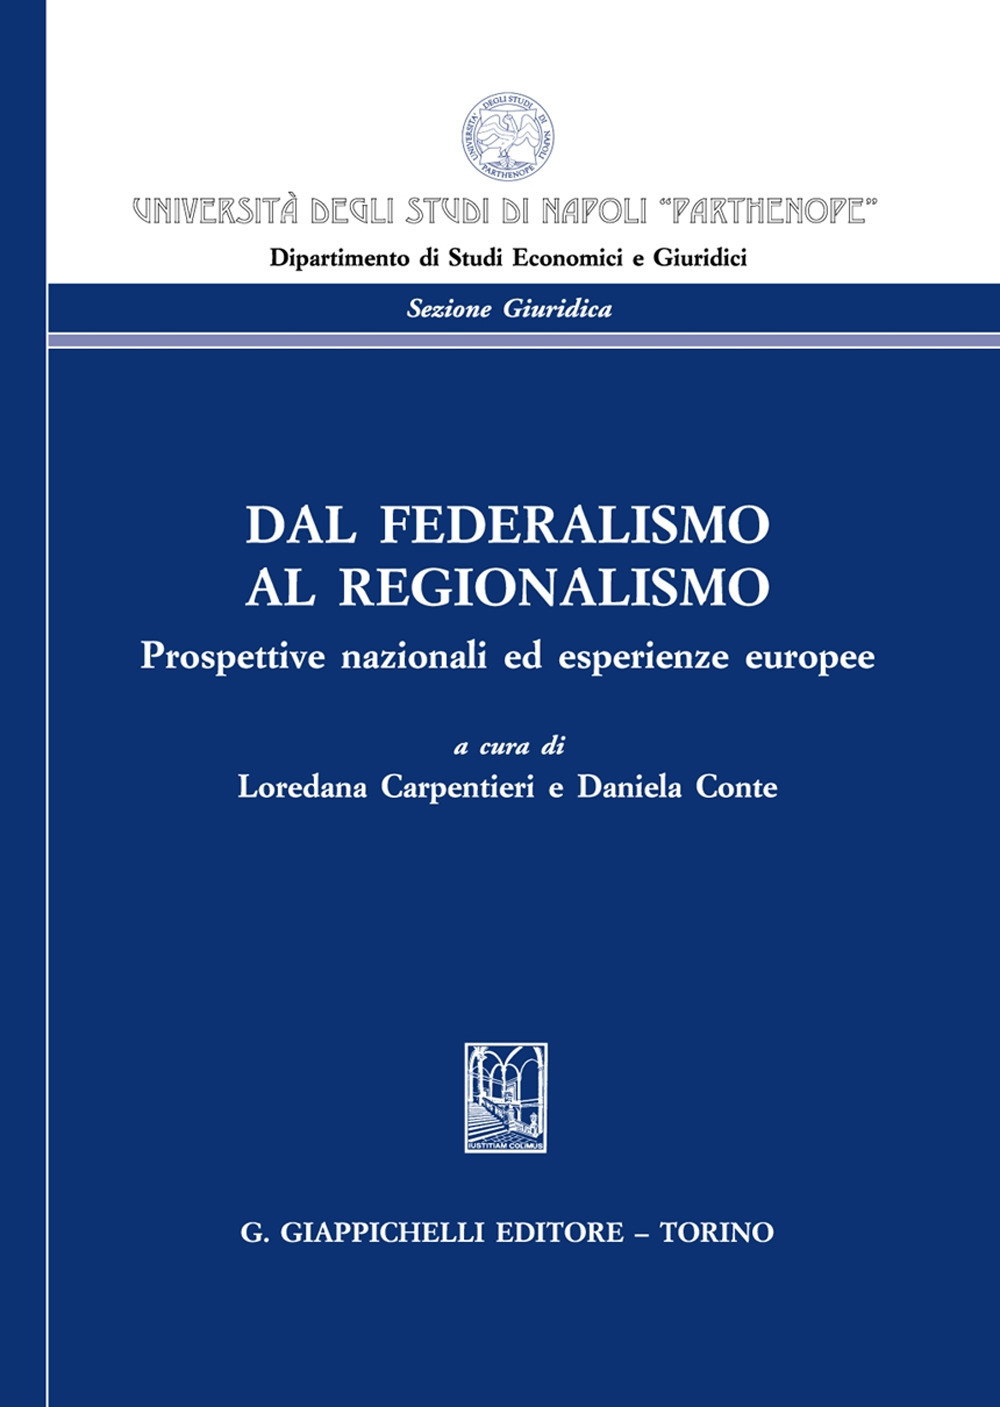 Dal federalismo al regionalismo. Prospettive nazionali ed esperienze europee